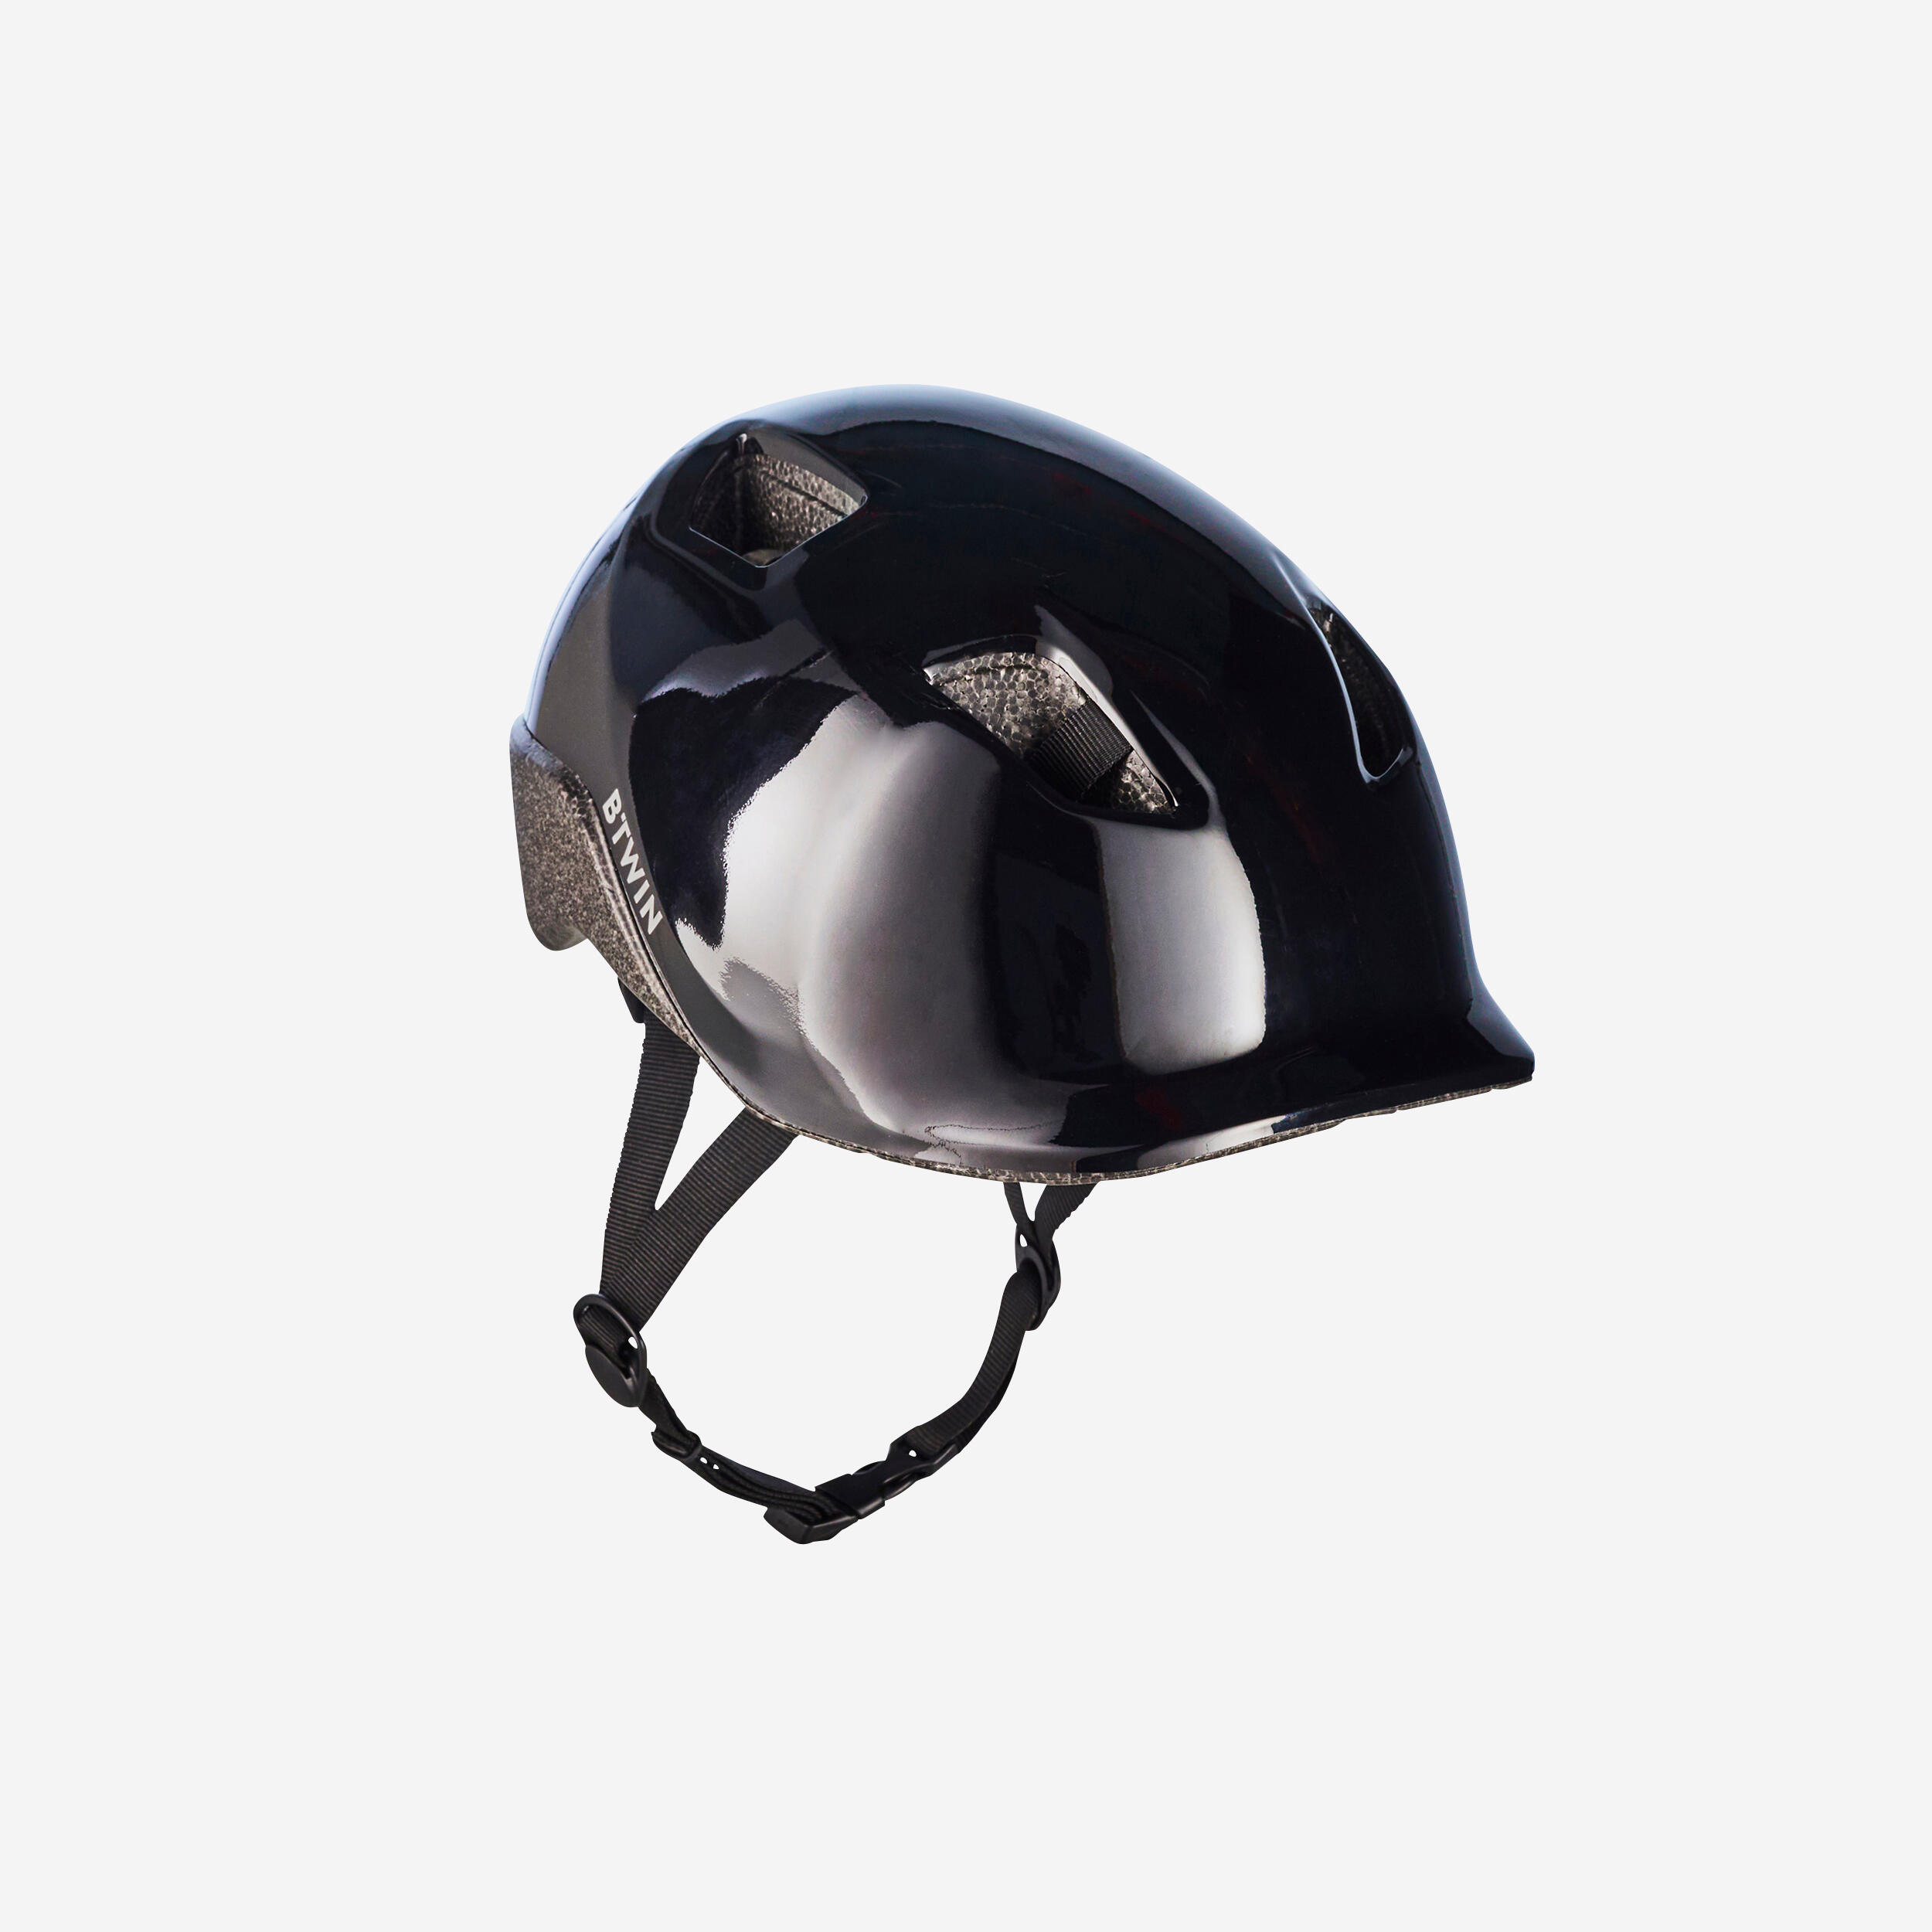 BTWIN Kids' Bike Helmet 100 - Black